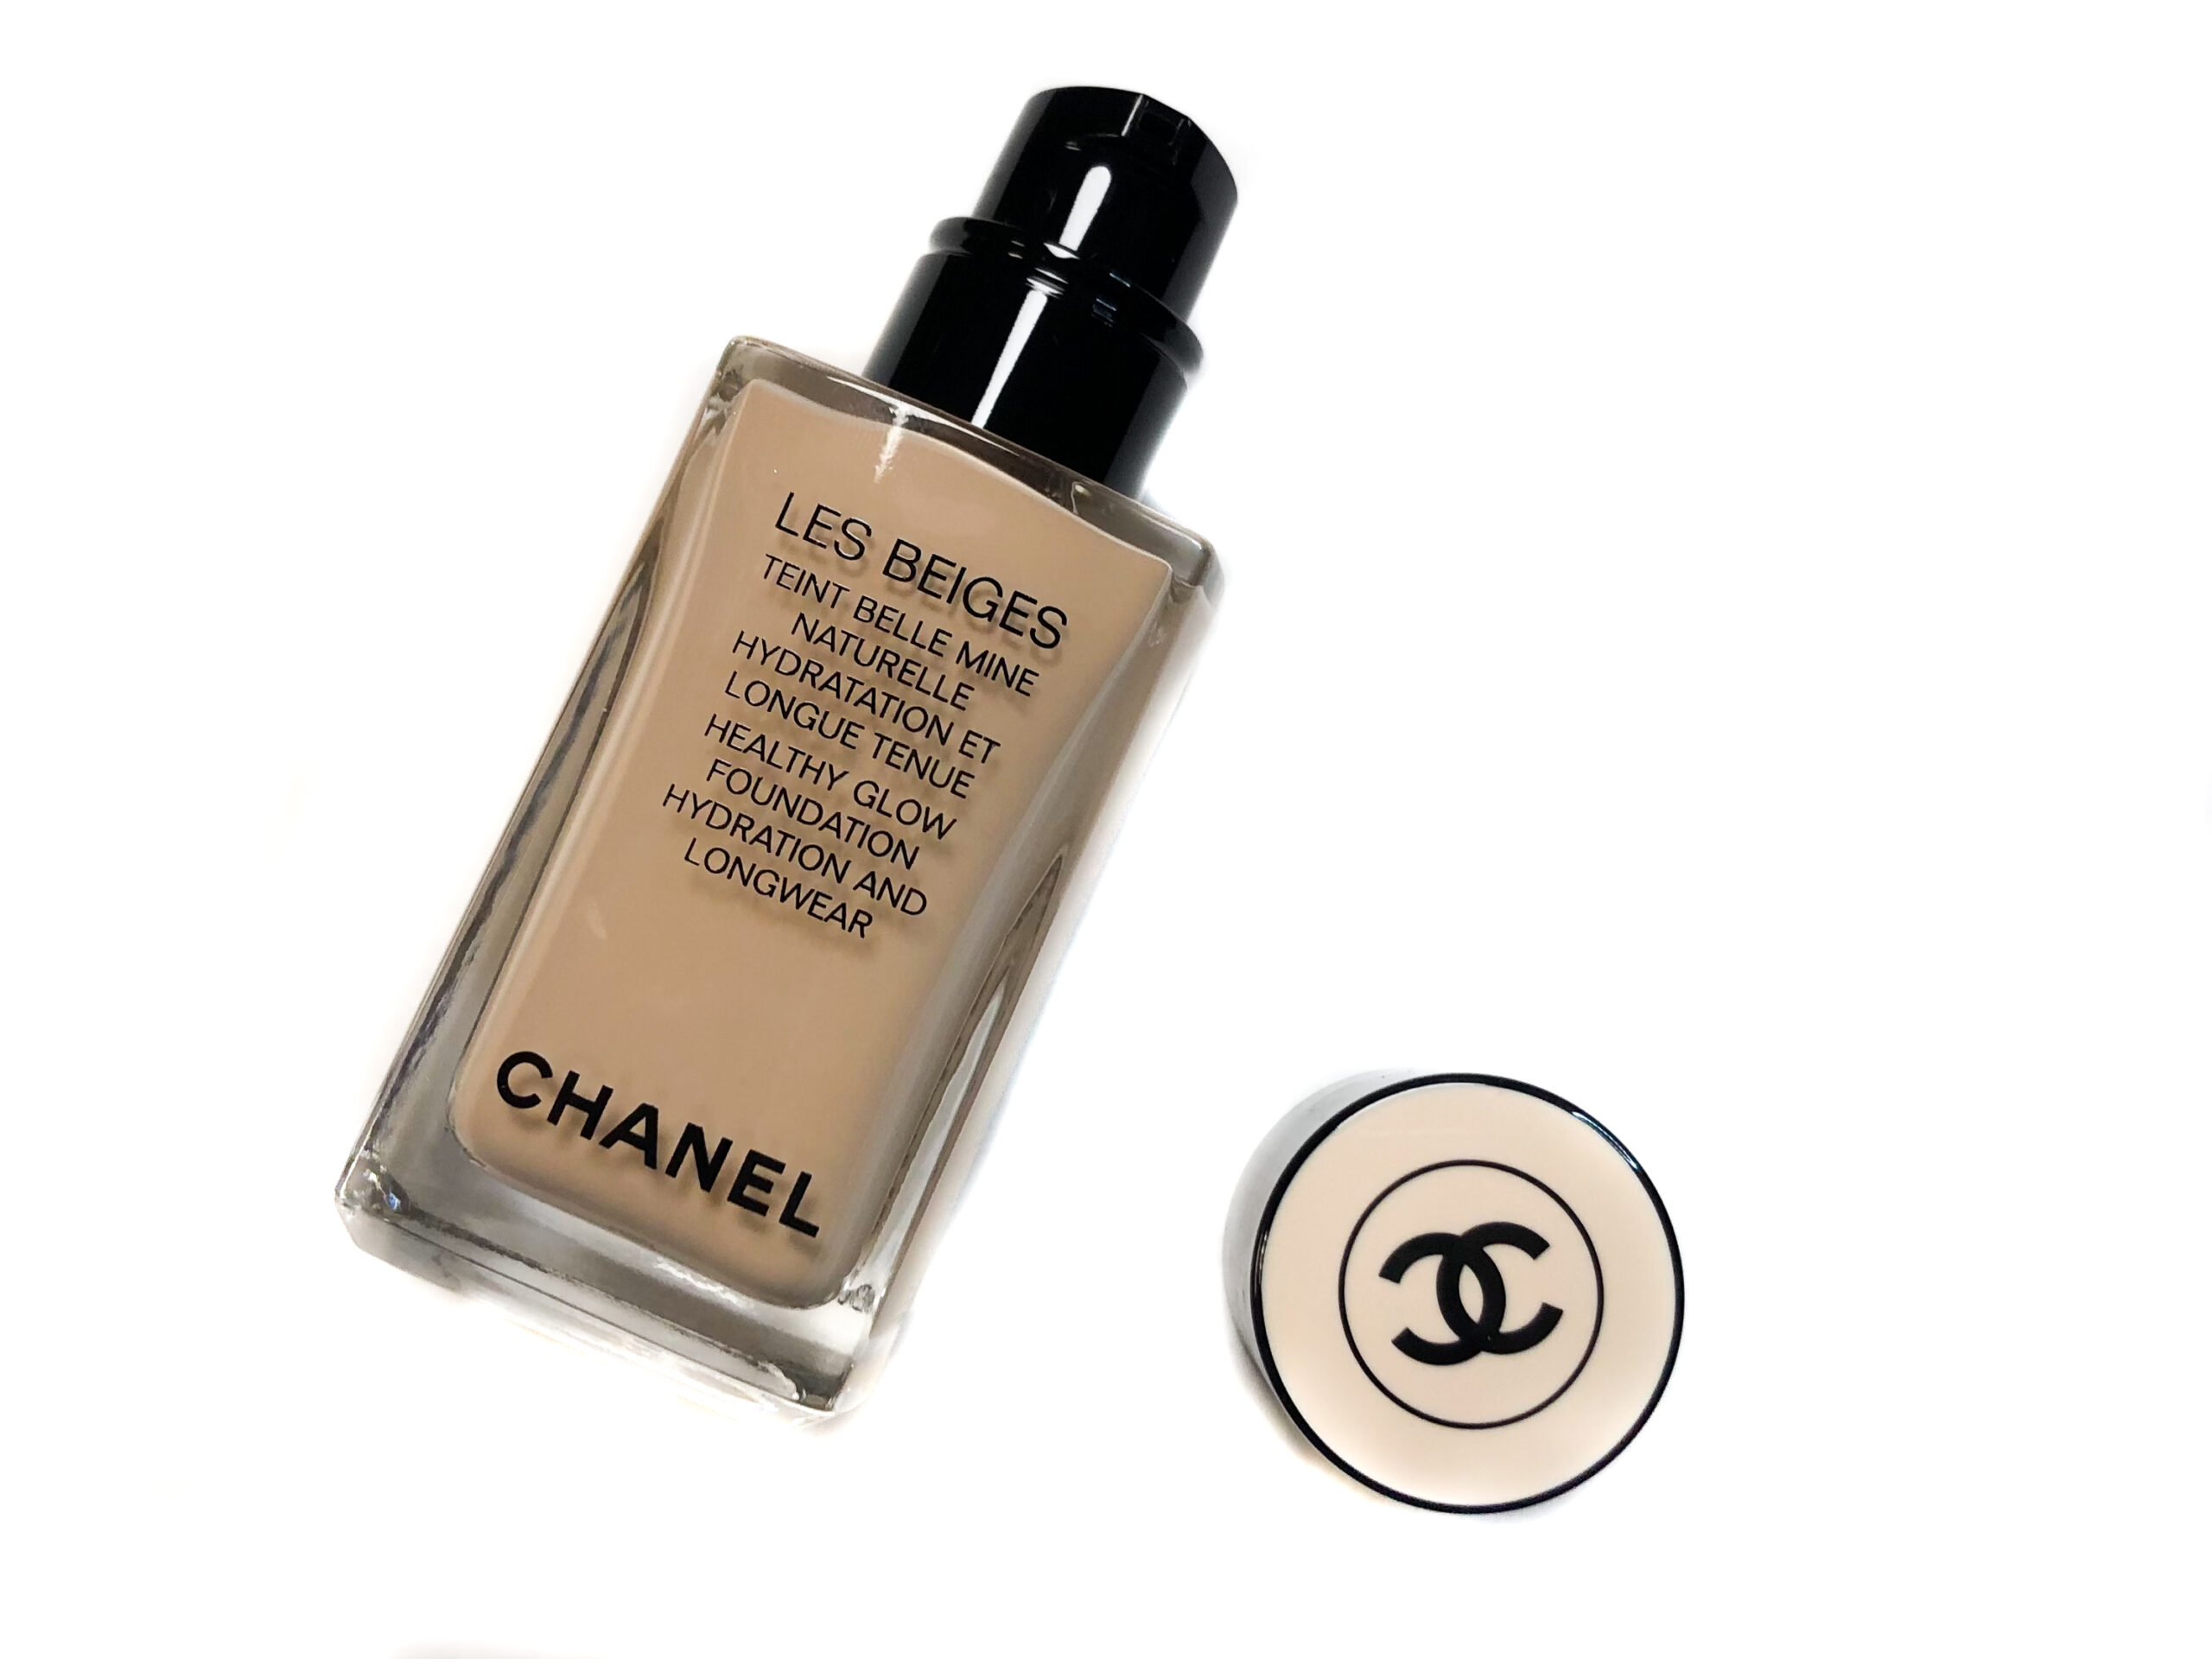 Chanel Les Beiges Healthy Glow Campaign